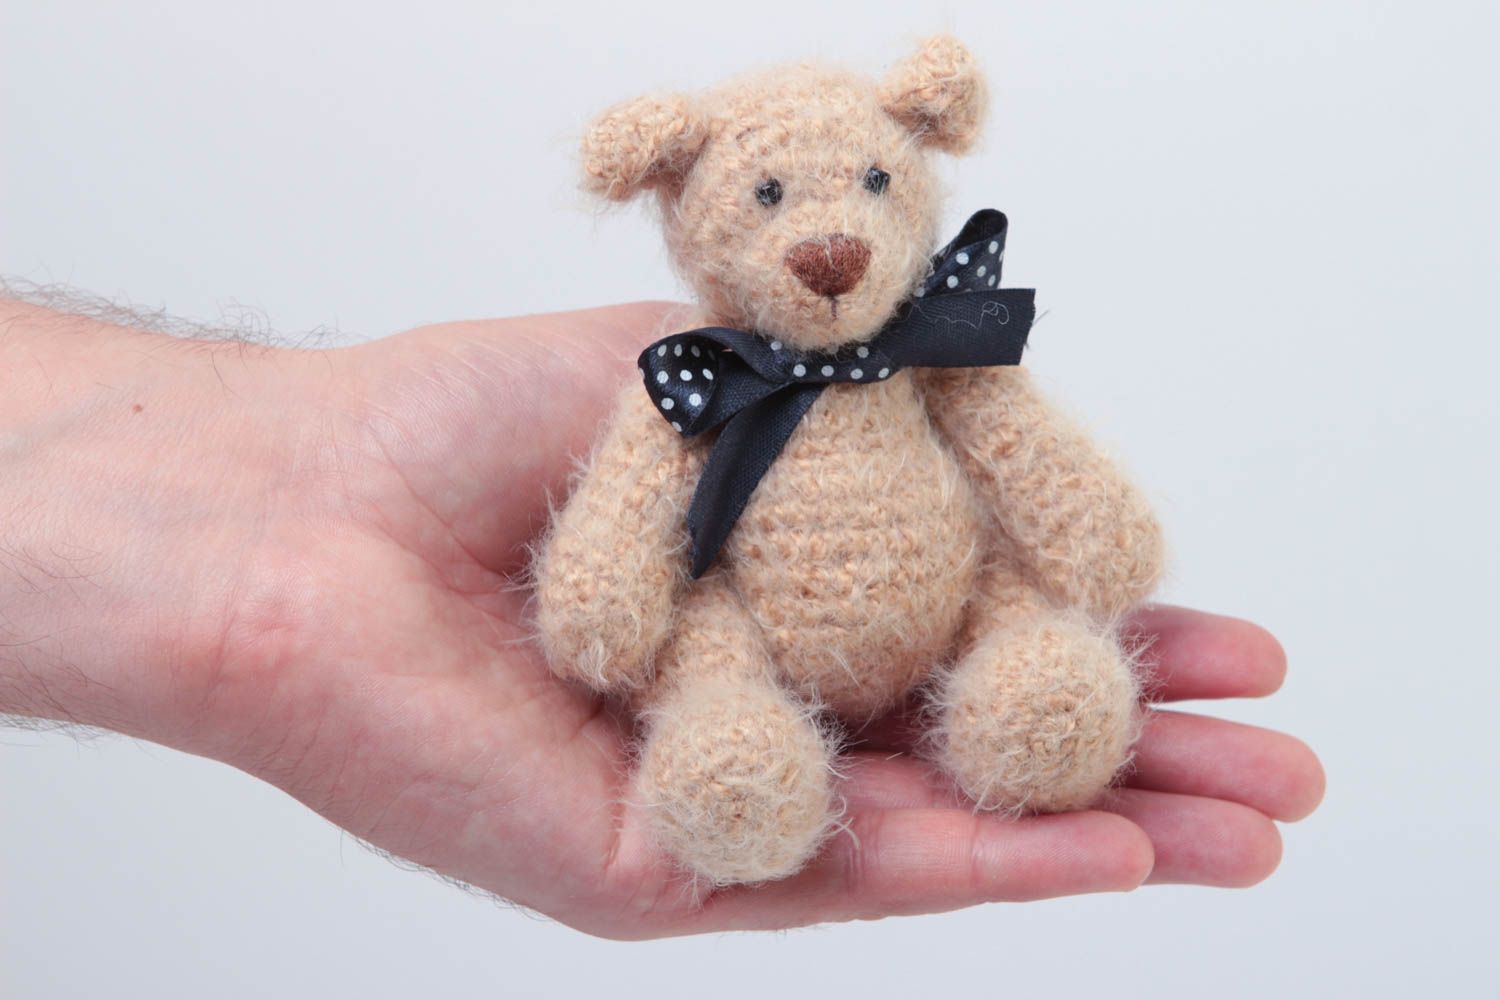 Handmade soft toy stuffed animals bear toy gifts for kids nursery decor photo 5